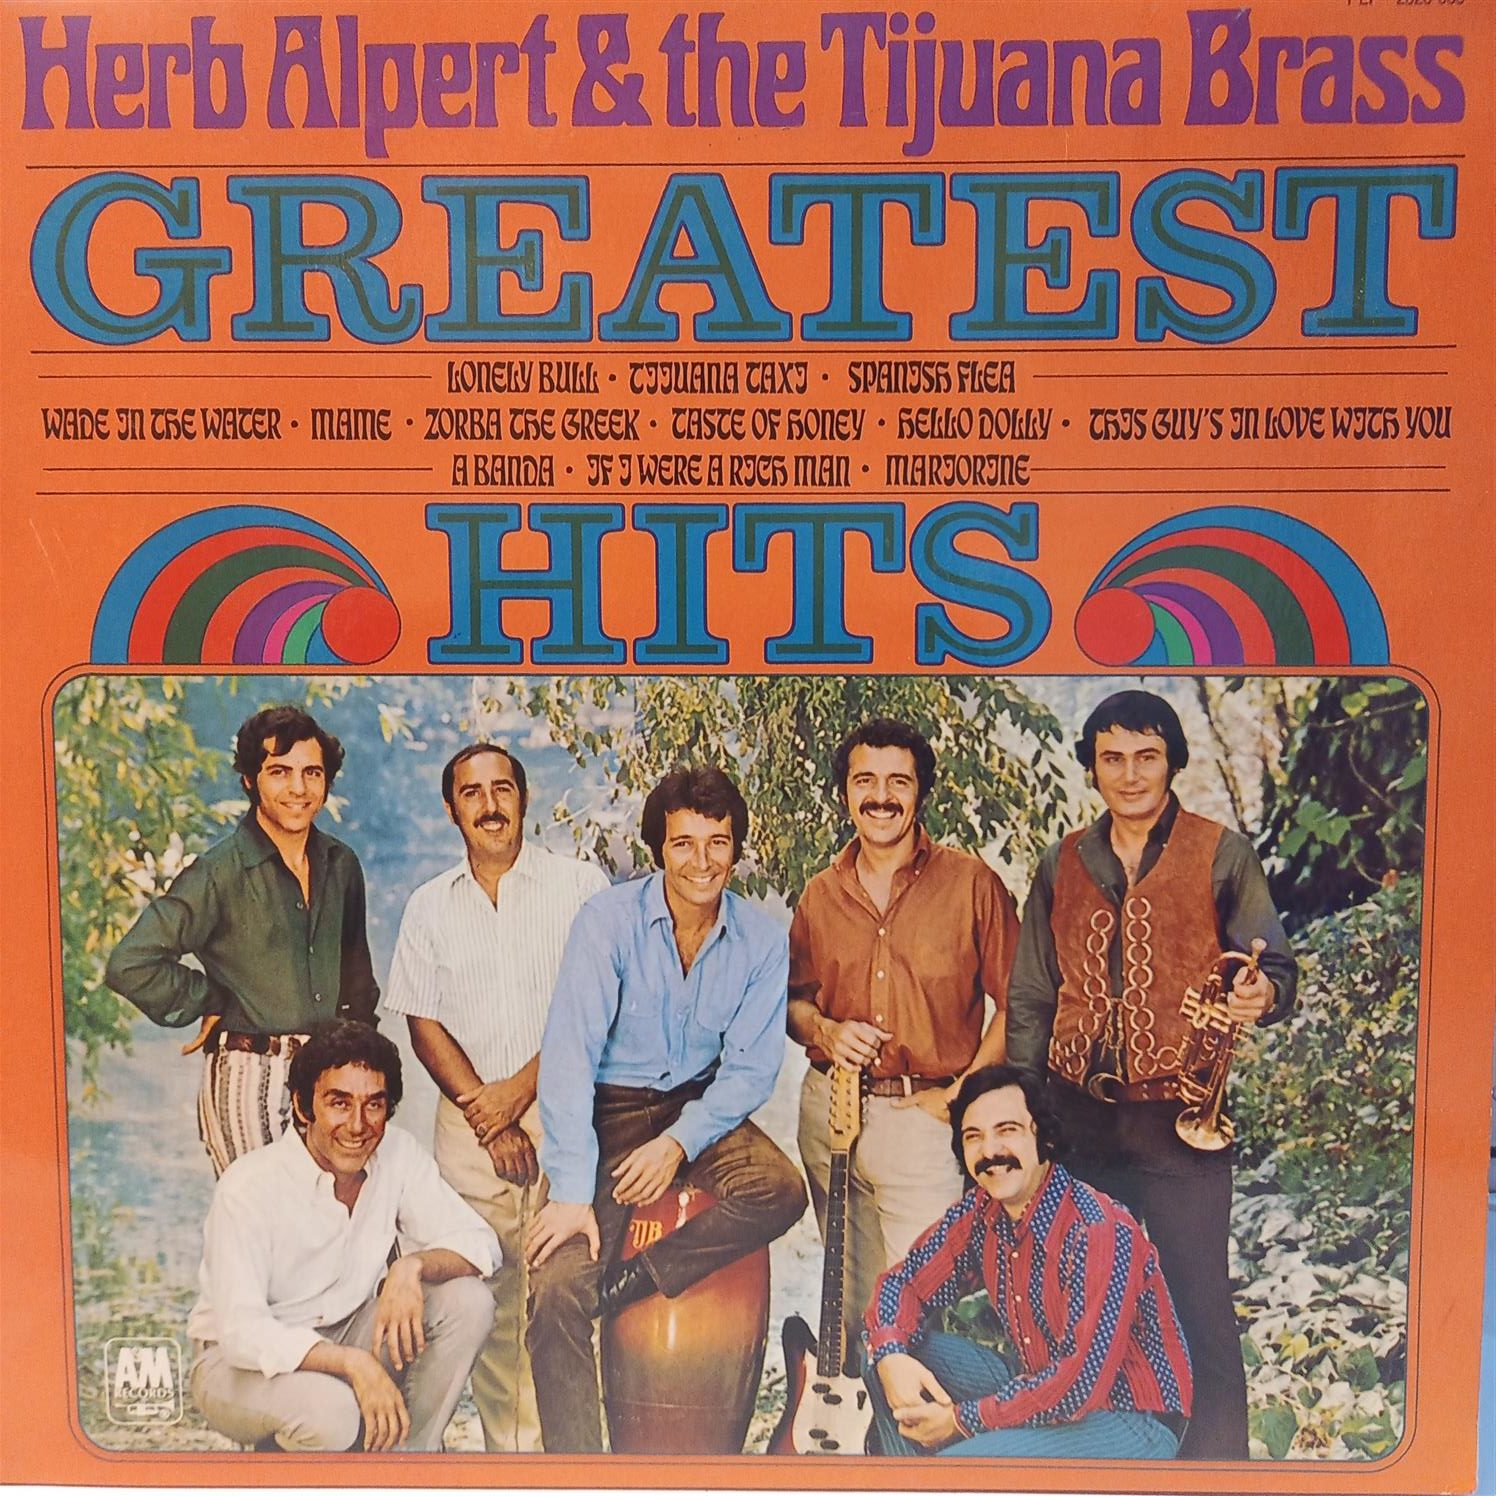 HERB ALPERT & THE TIJUANA BRASS – GREATEST HITS ON